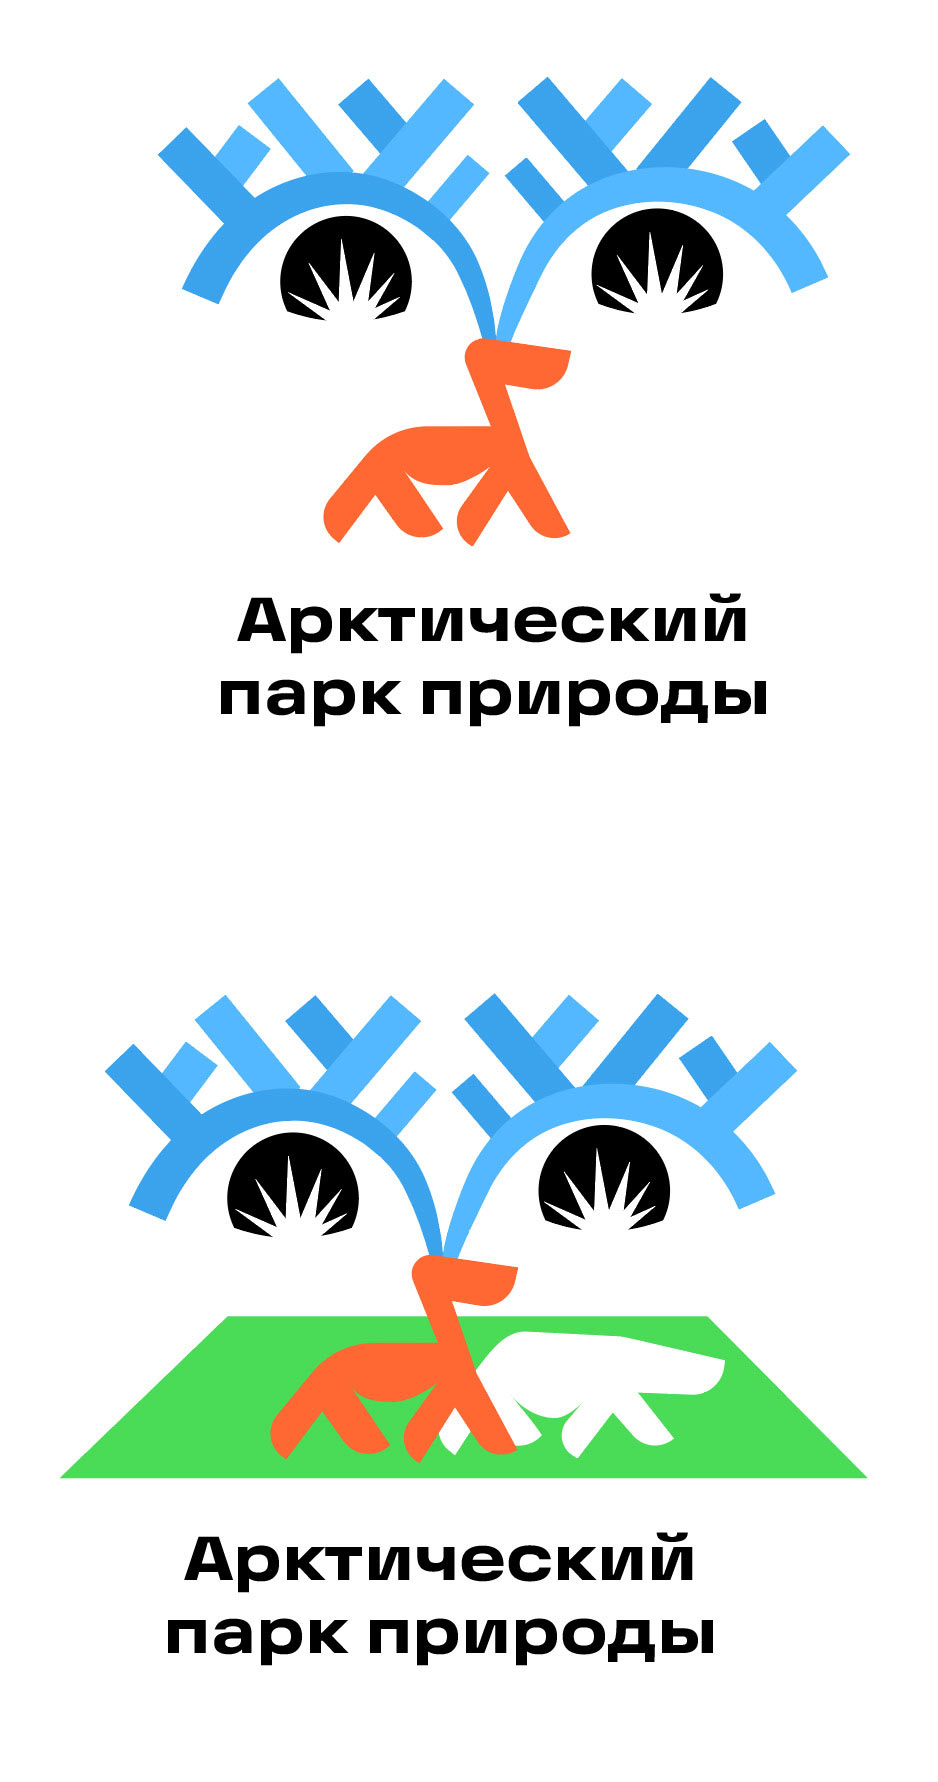 arktichesky park prirody process 03